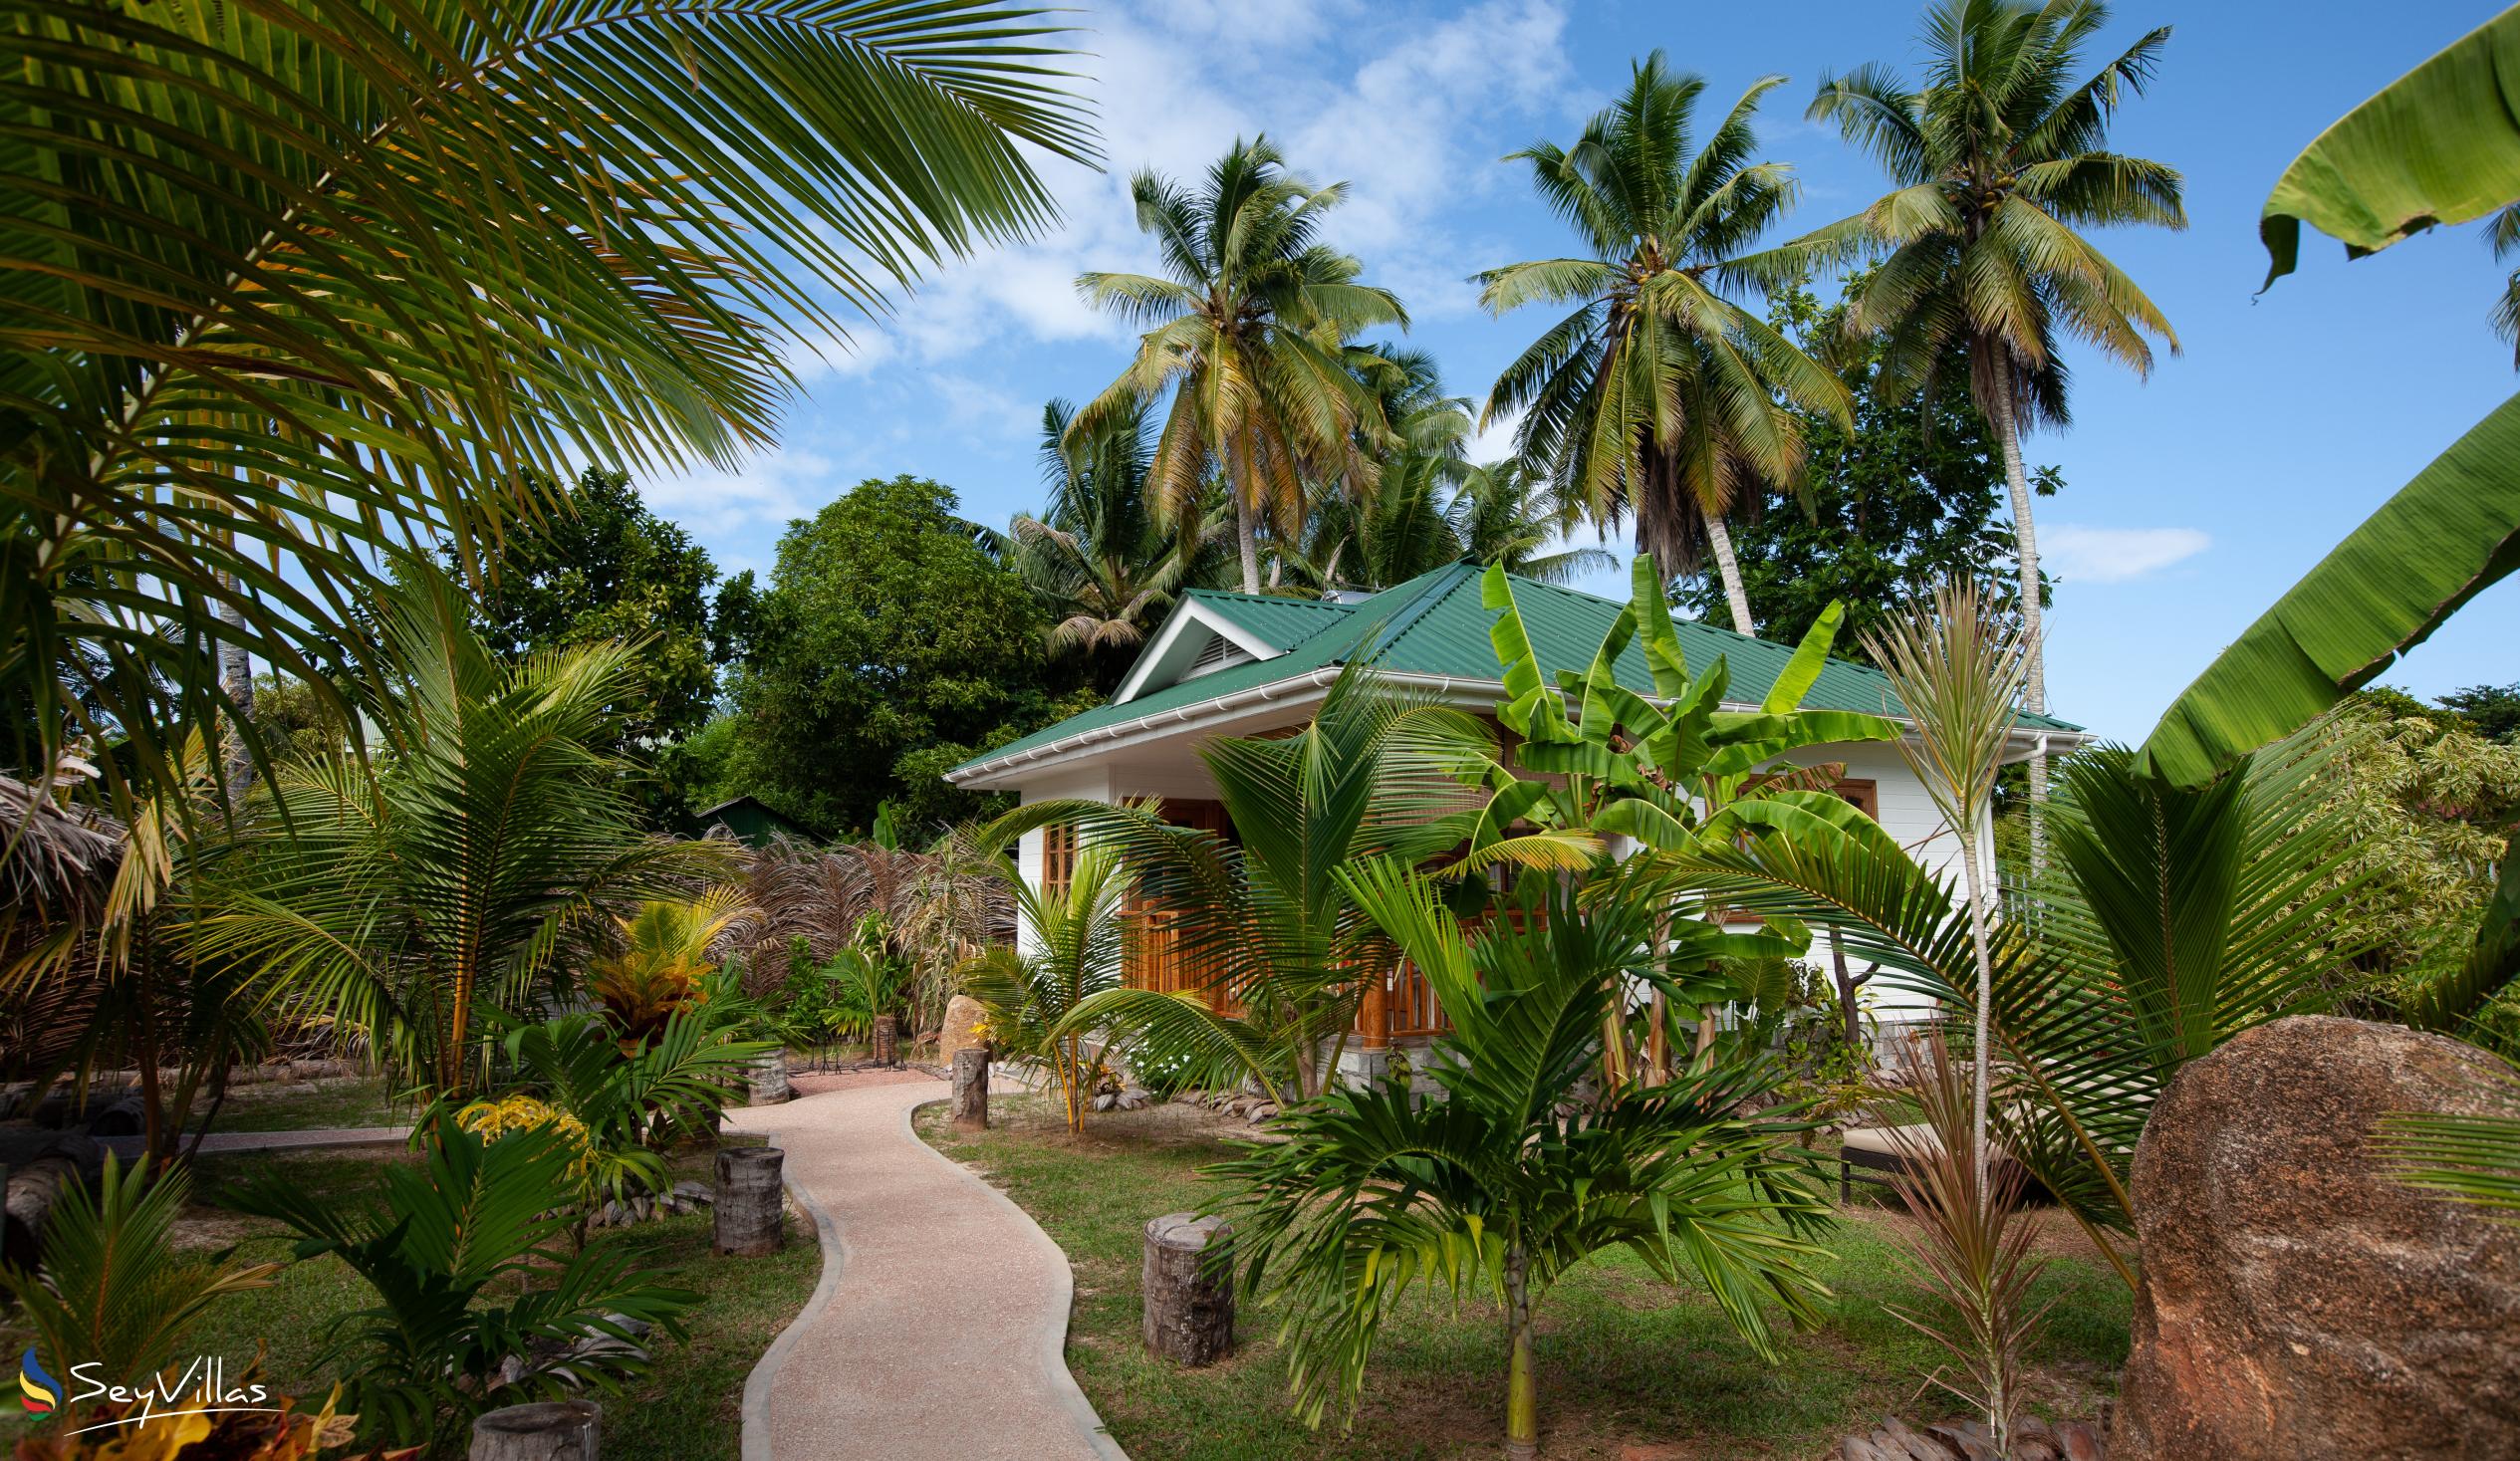 Foto 17: Coco de Mahi - Aussenbereich - La Digue (Seychellen)